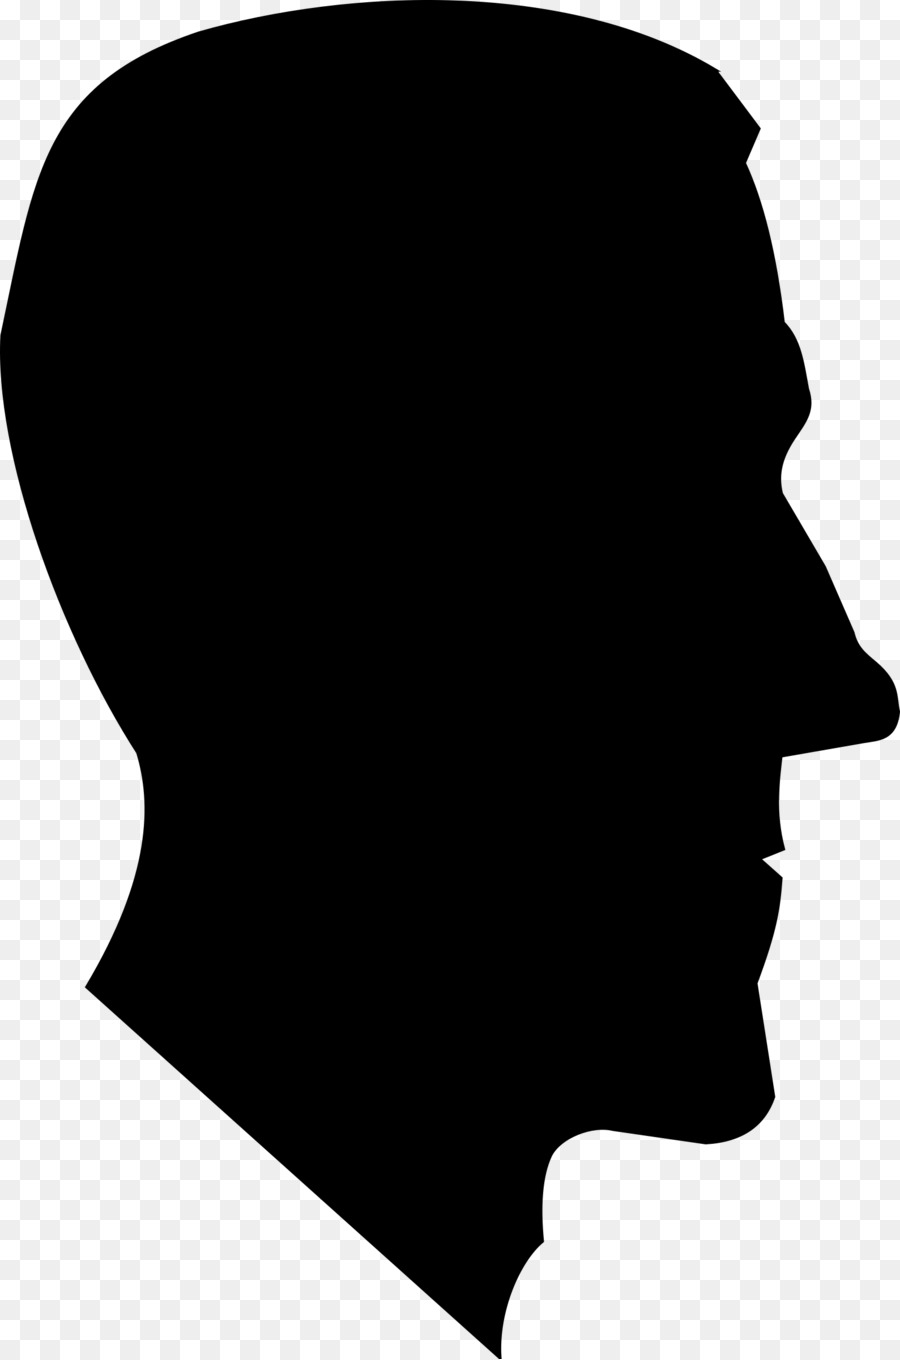 Silhouette Male Portrait Clip art - Profile png download - 1589*2400 - Free Transparent Silhouette png Download.